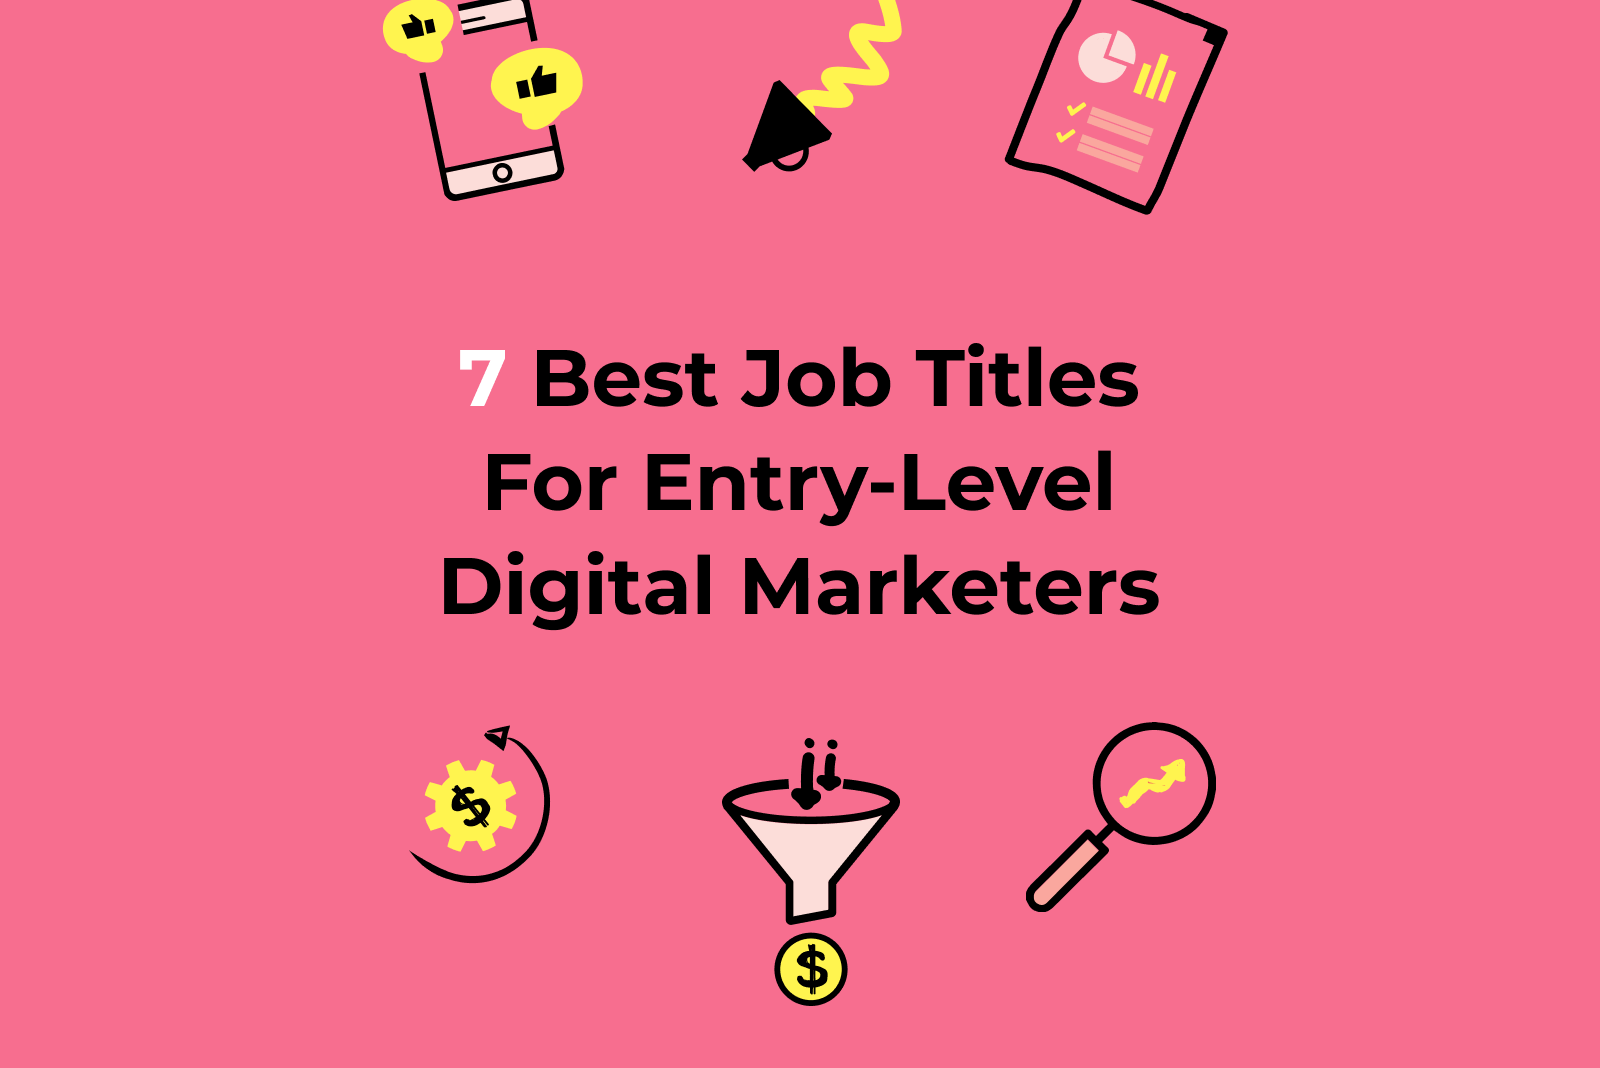 7 Best Job Titles For Entry-Level Digital Marketers